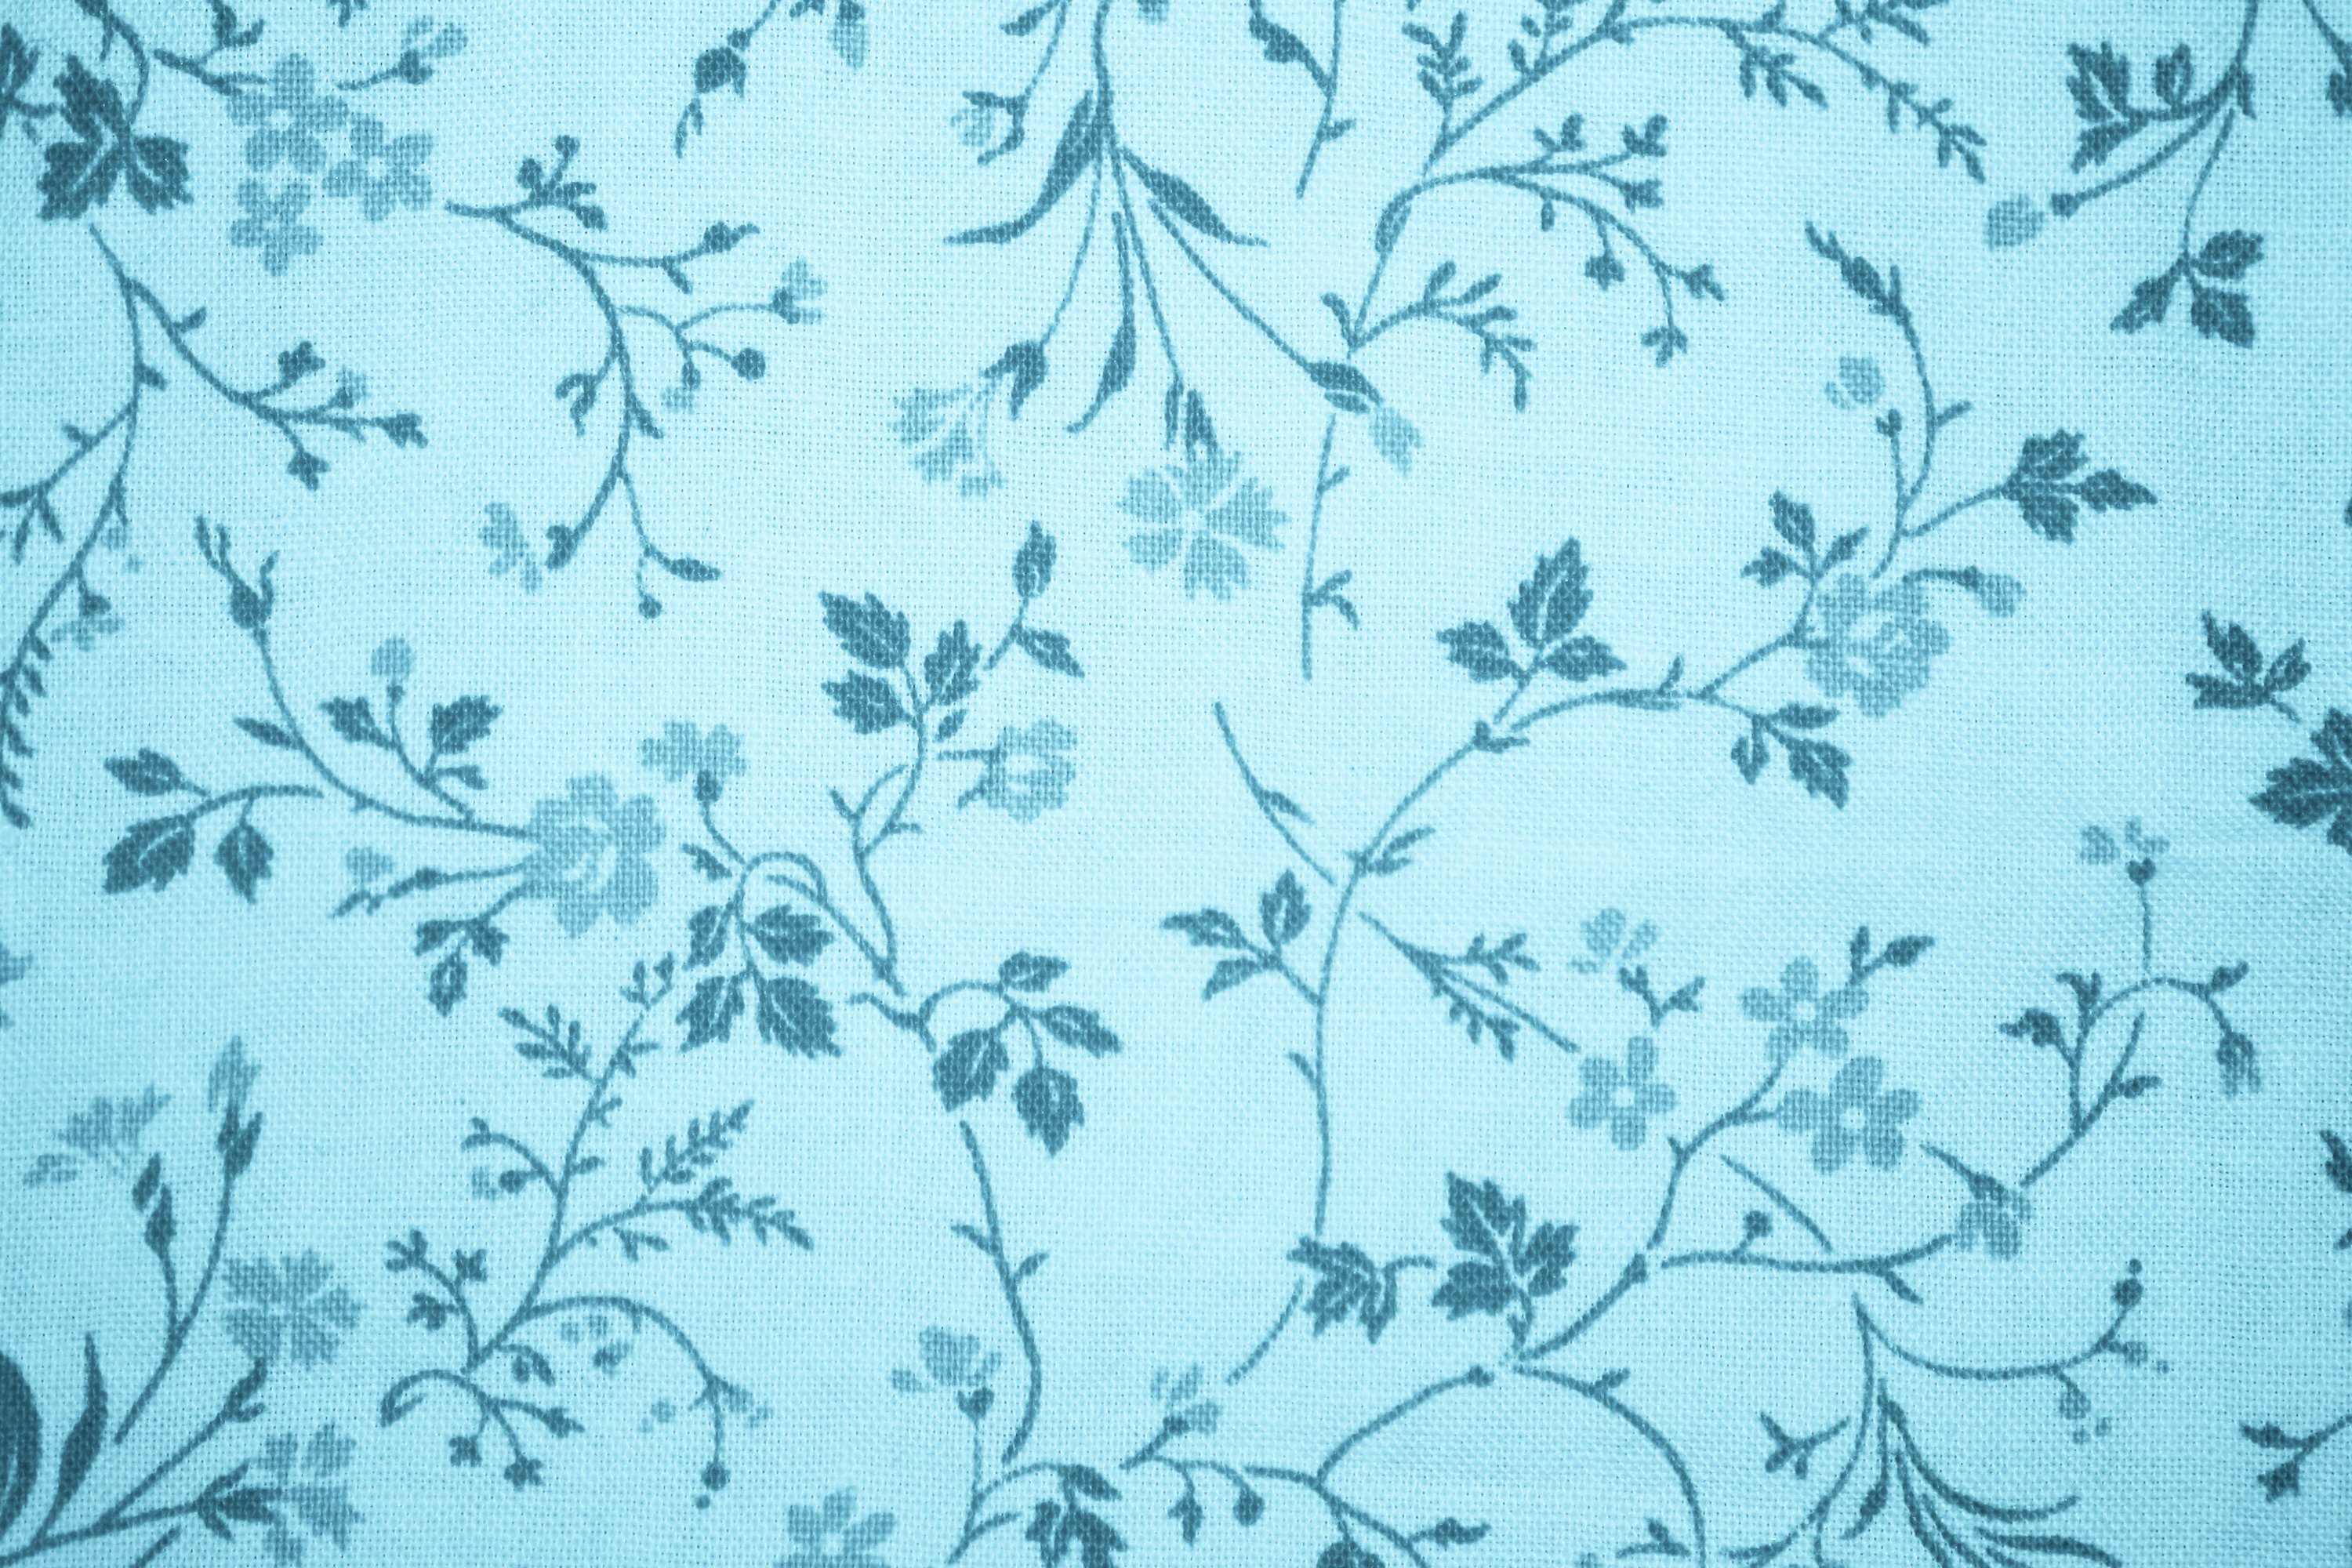 Blue Floral Pattern Background